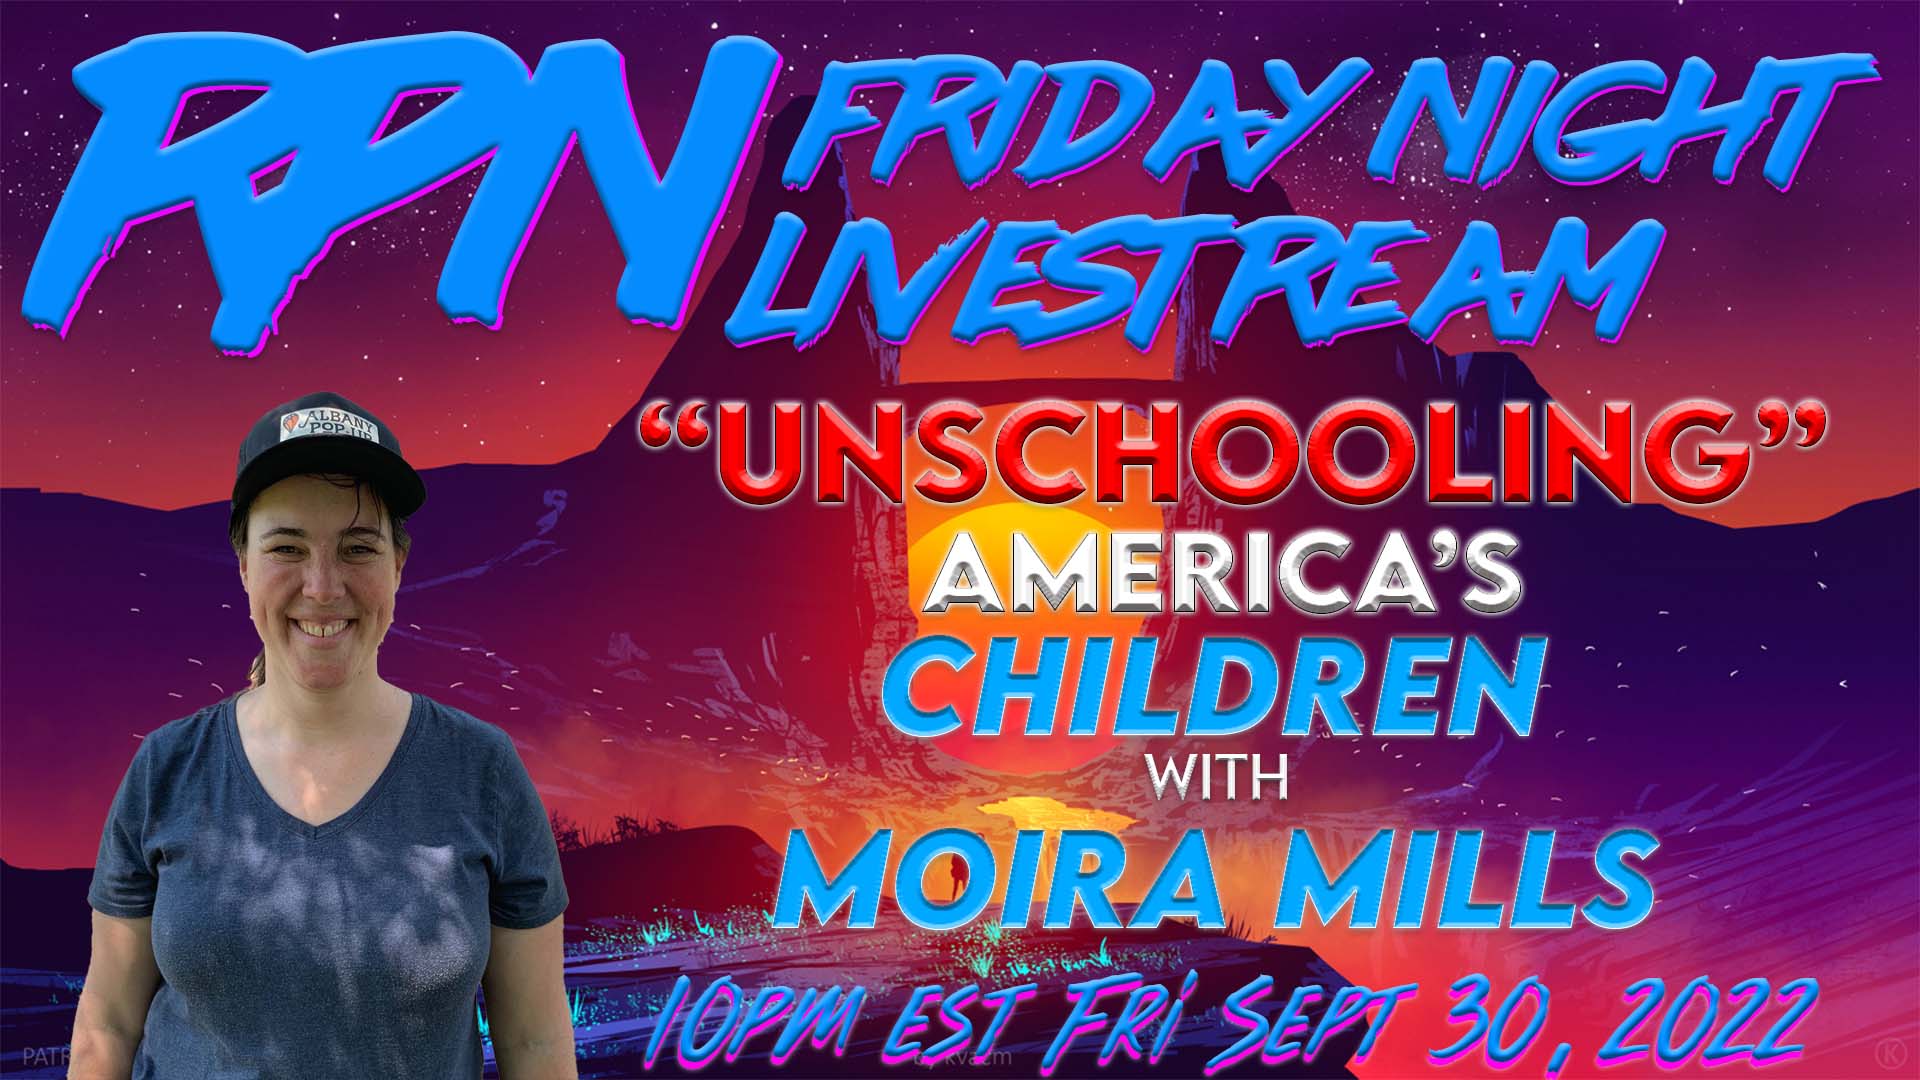 “Unschooling” America’s Children with Moira Mills on Fri. Night Livestream